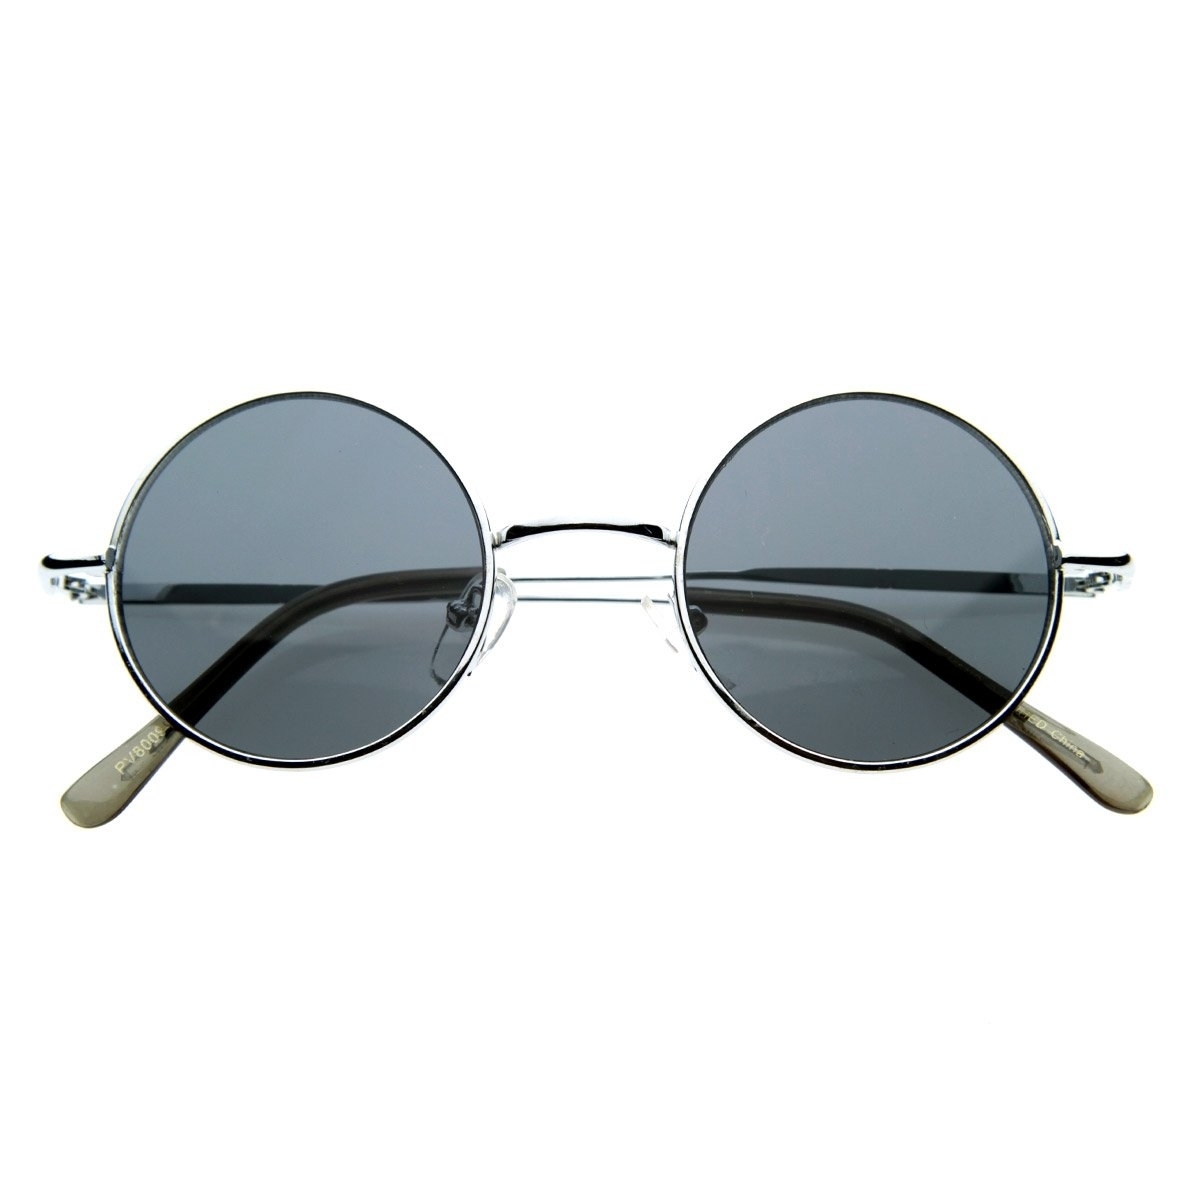 Small Retro-Vintage Style Lennon Inspired Round Metal Circle Sunglasses - Gunmetal